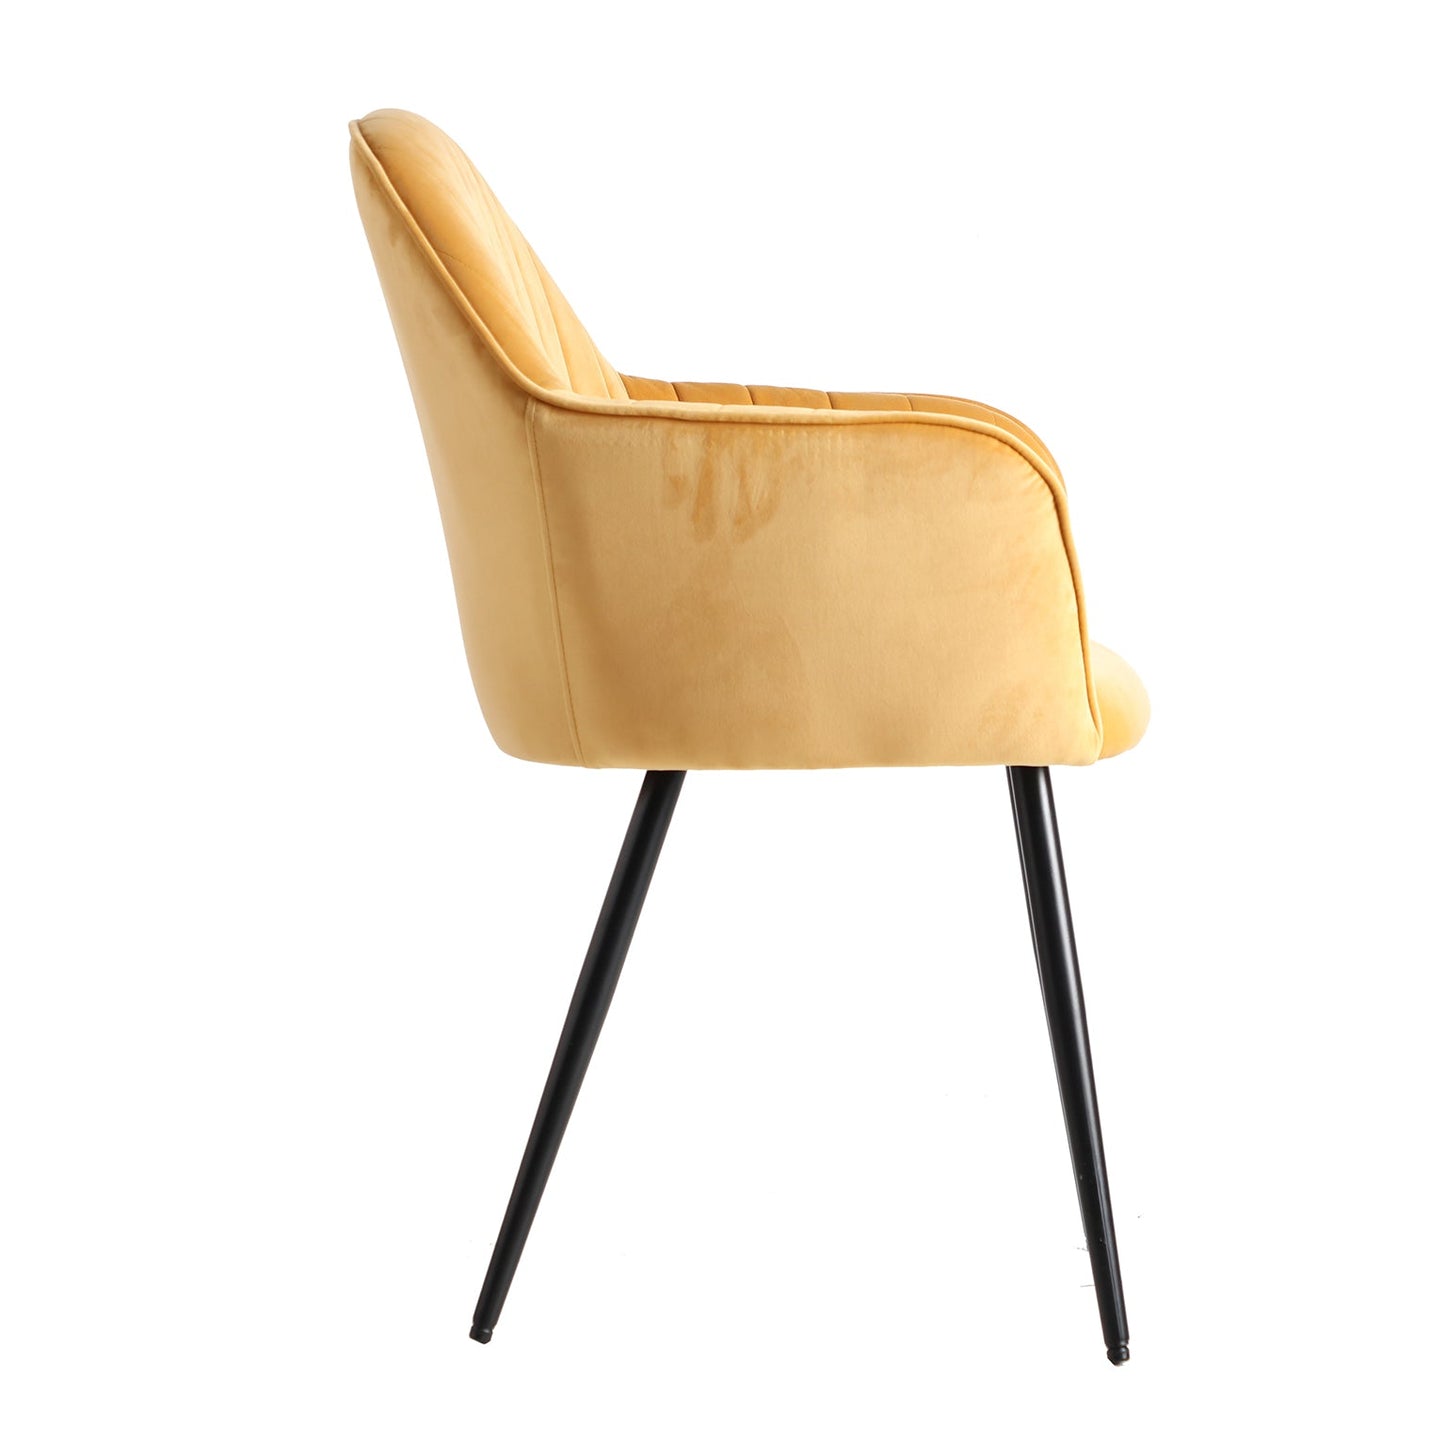 Calci Chair in Mustard Colour